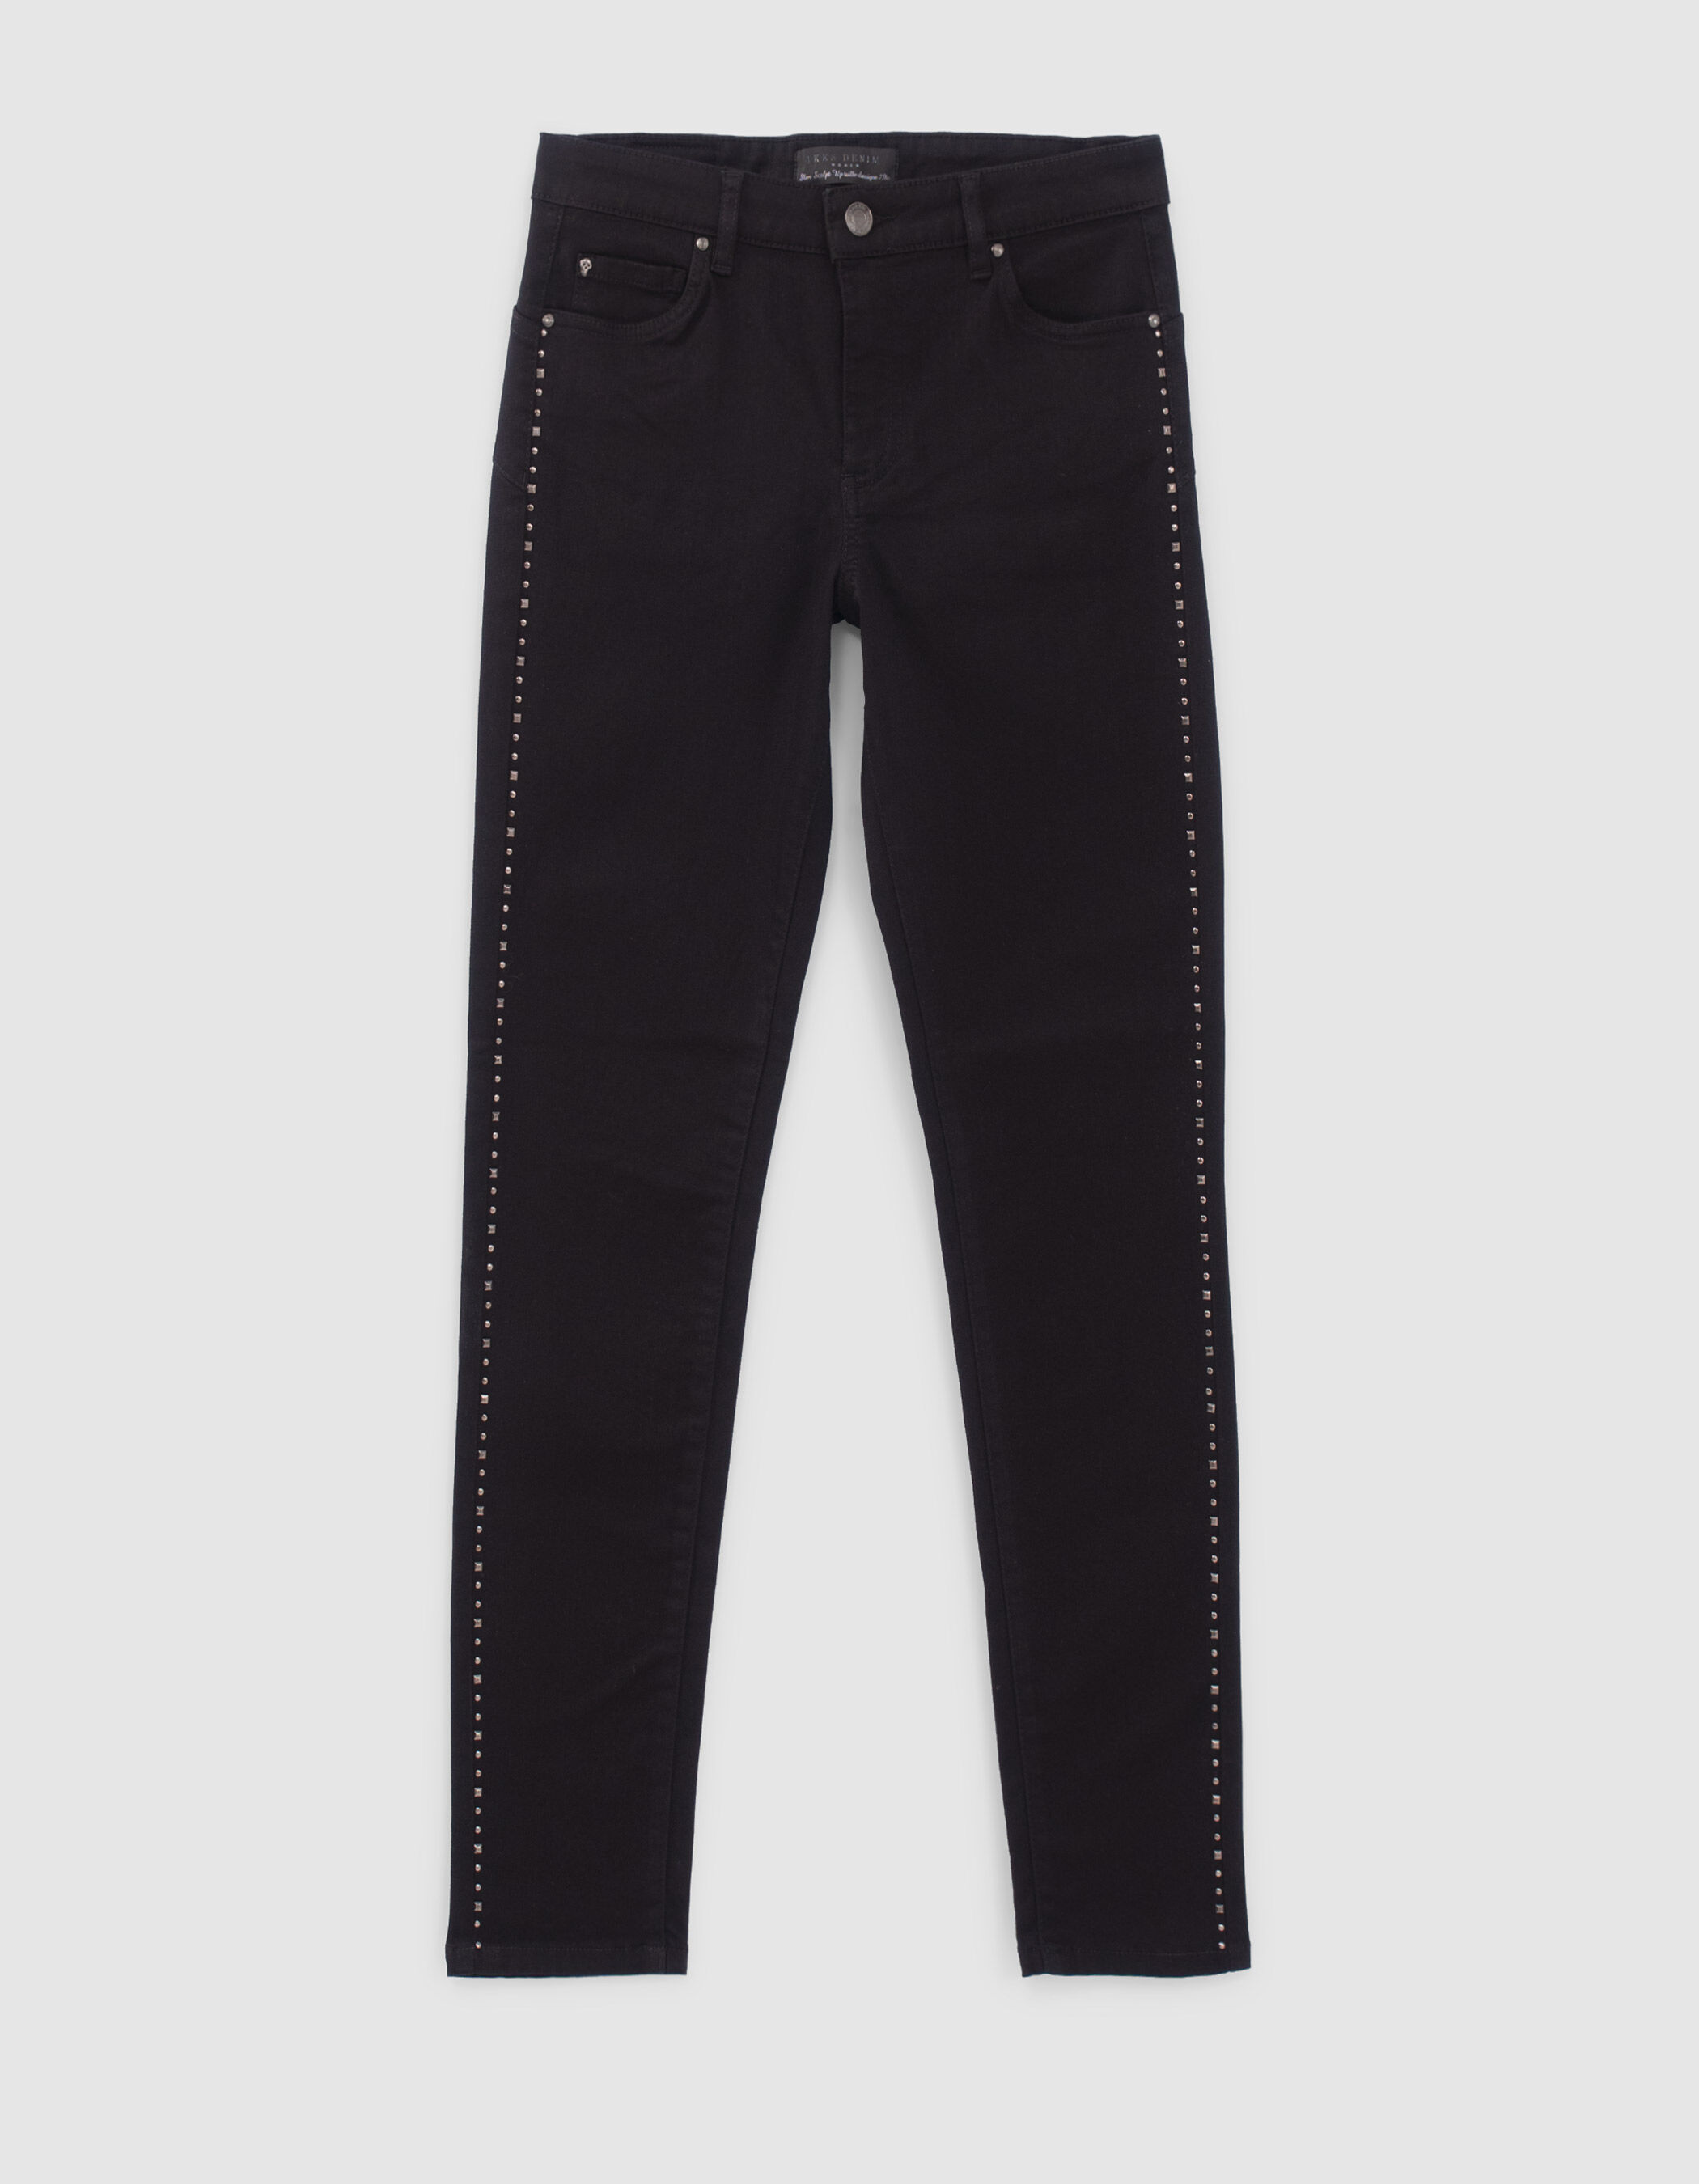 Women's black sculpt-up slim jeans with studs down sides